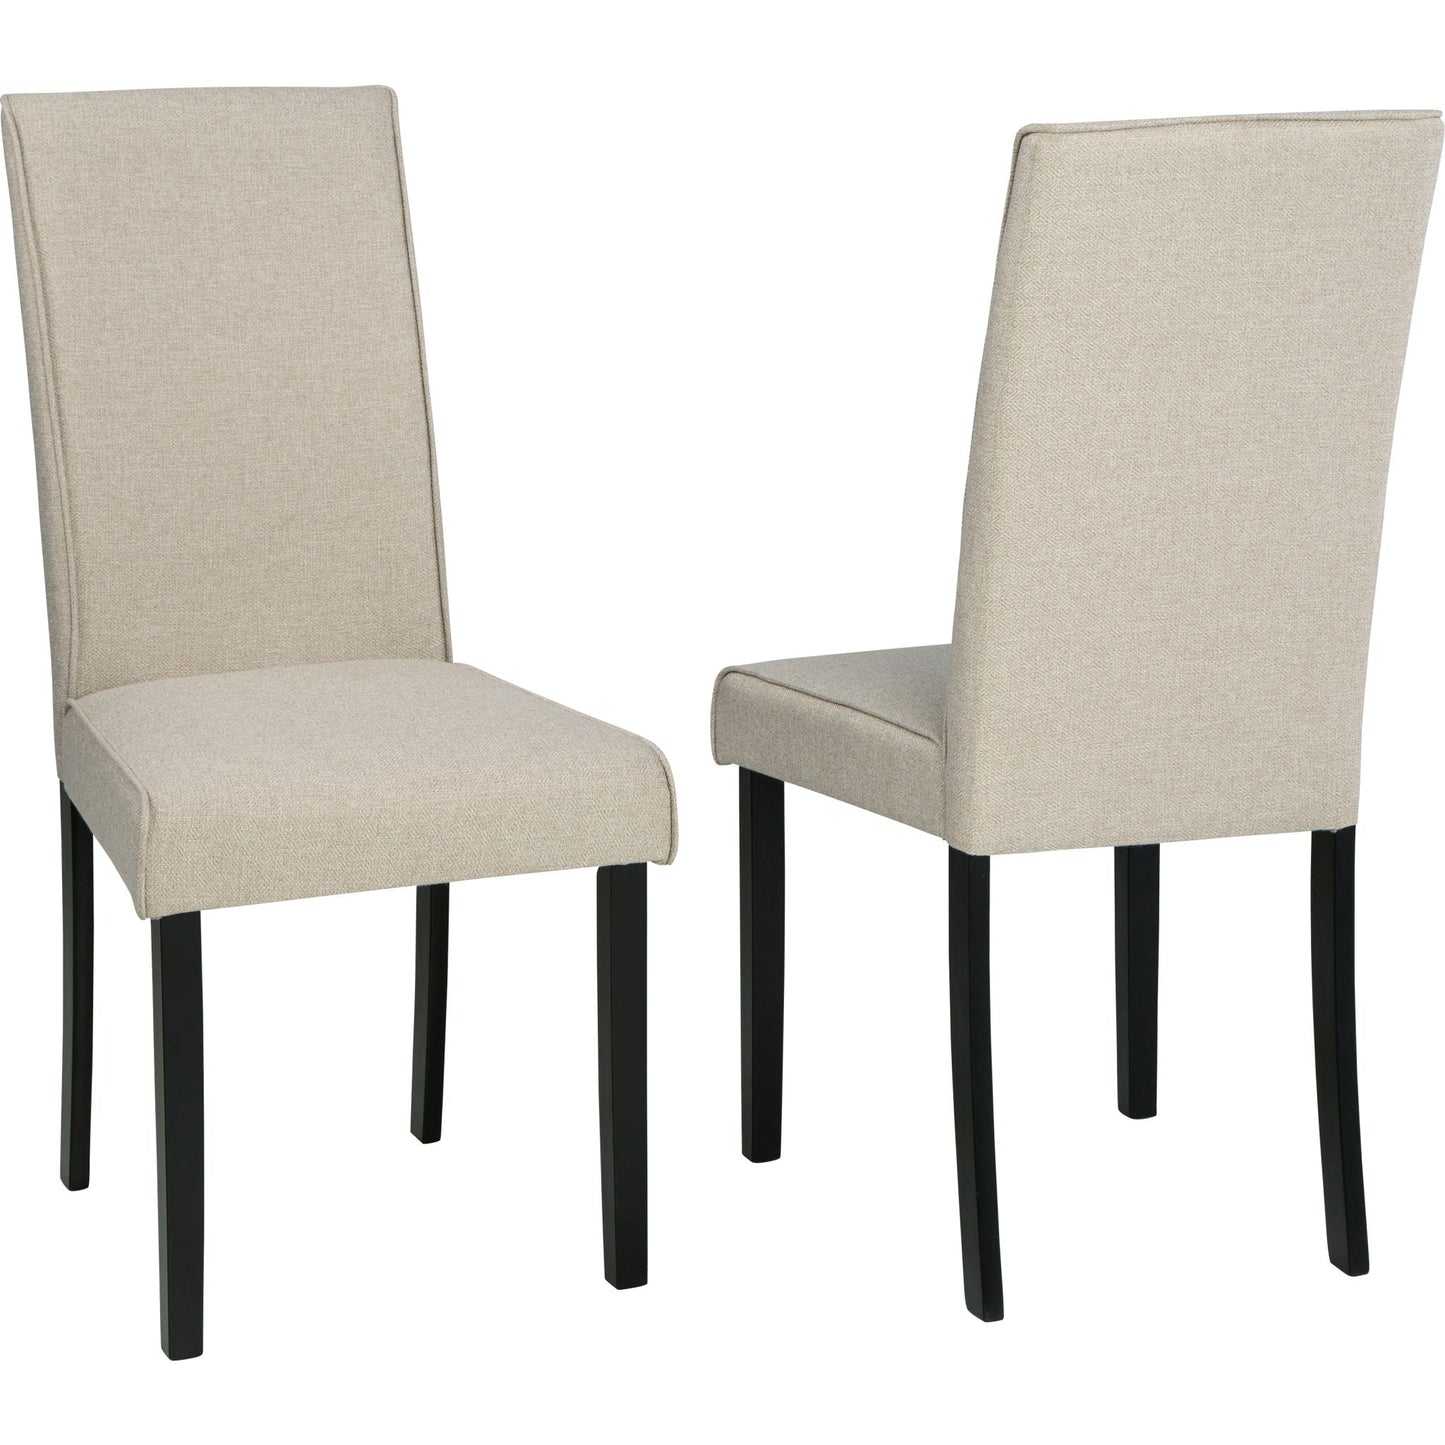 Kimonte Upholstered Side Chair - Dark Brown/Beige - (D250-05)